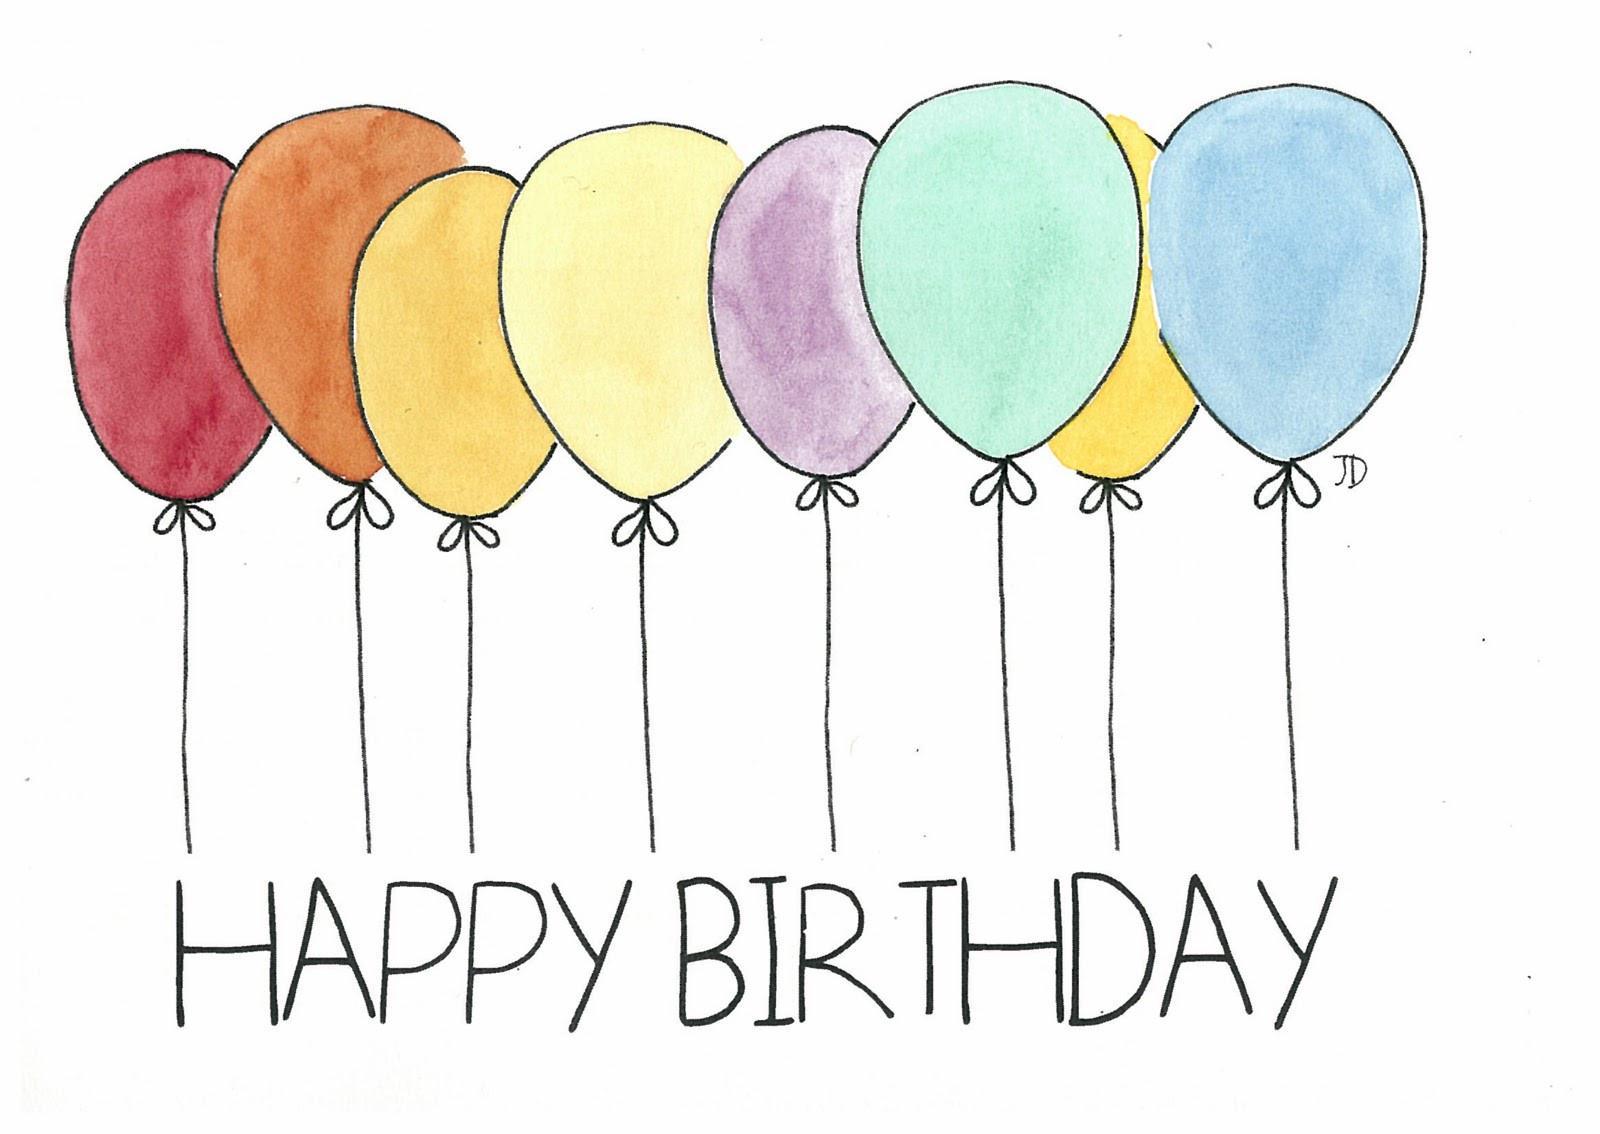 Best ideas about Balloon Birthday Card
. Save or Pin BLACK RHINO studio Balloon Birthday Cards Now.